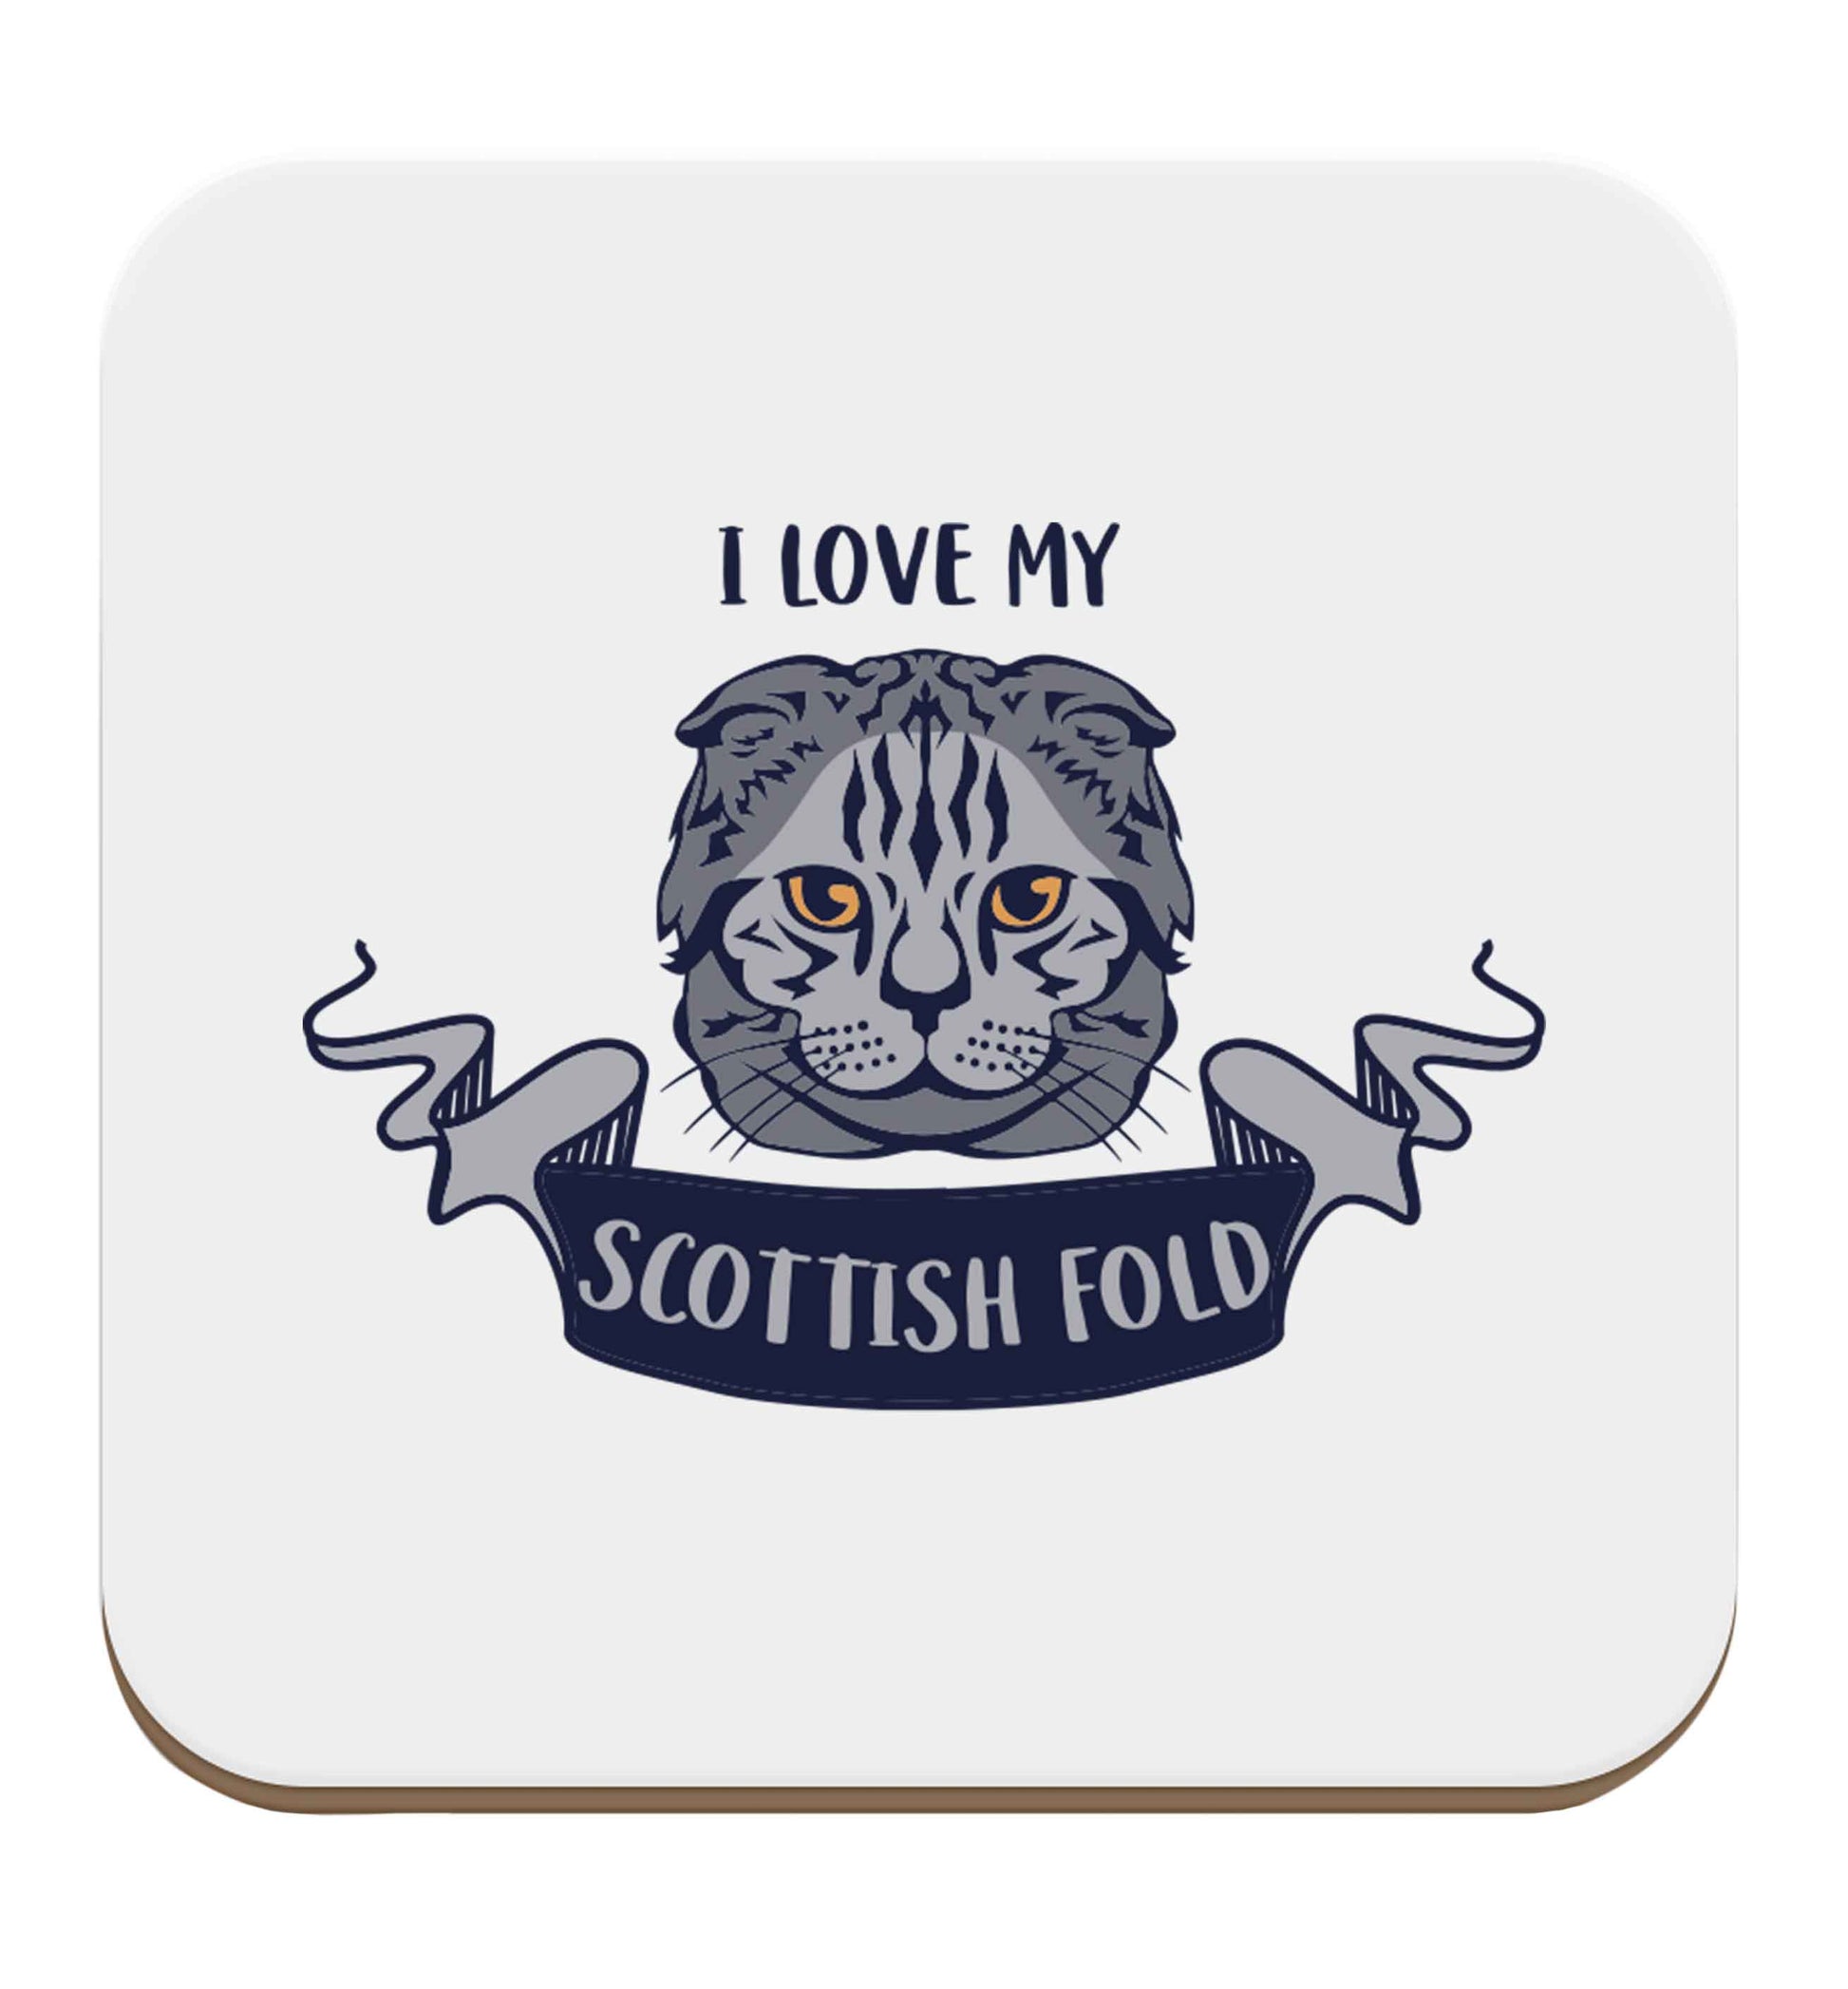 I love my scottish fold cat set of four coasters